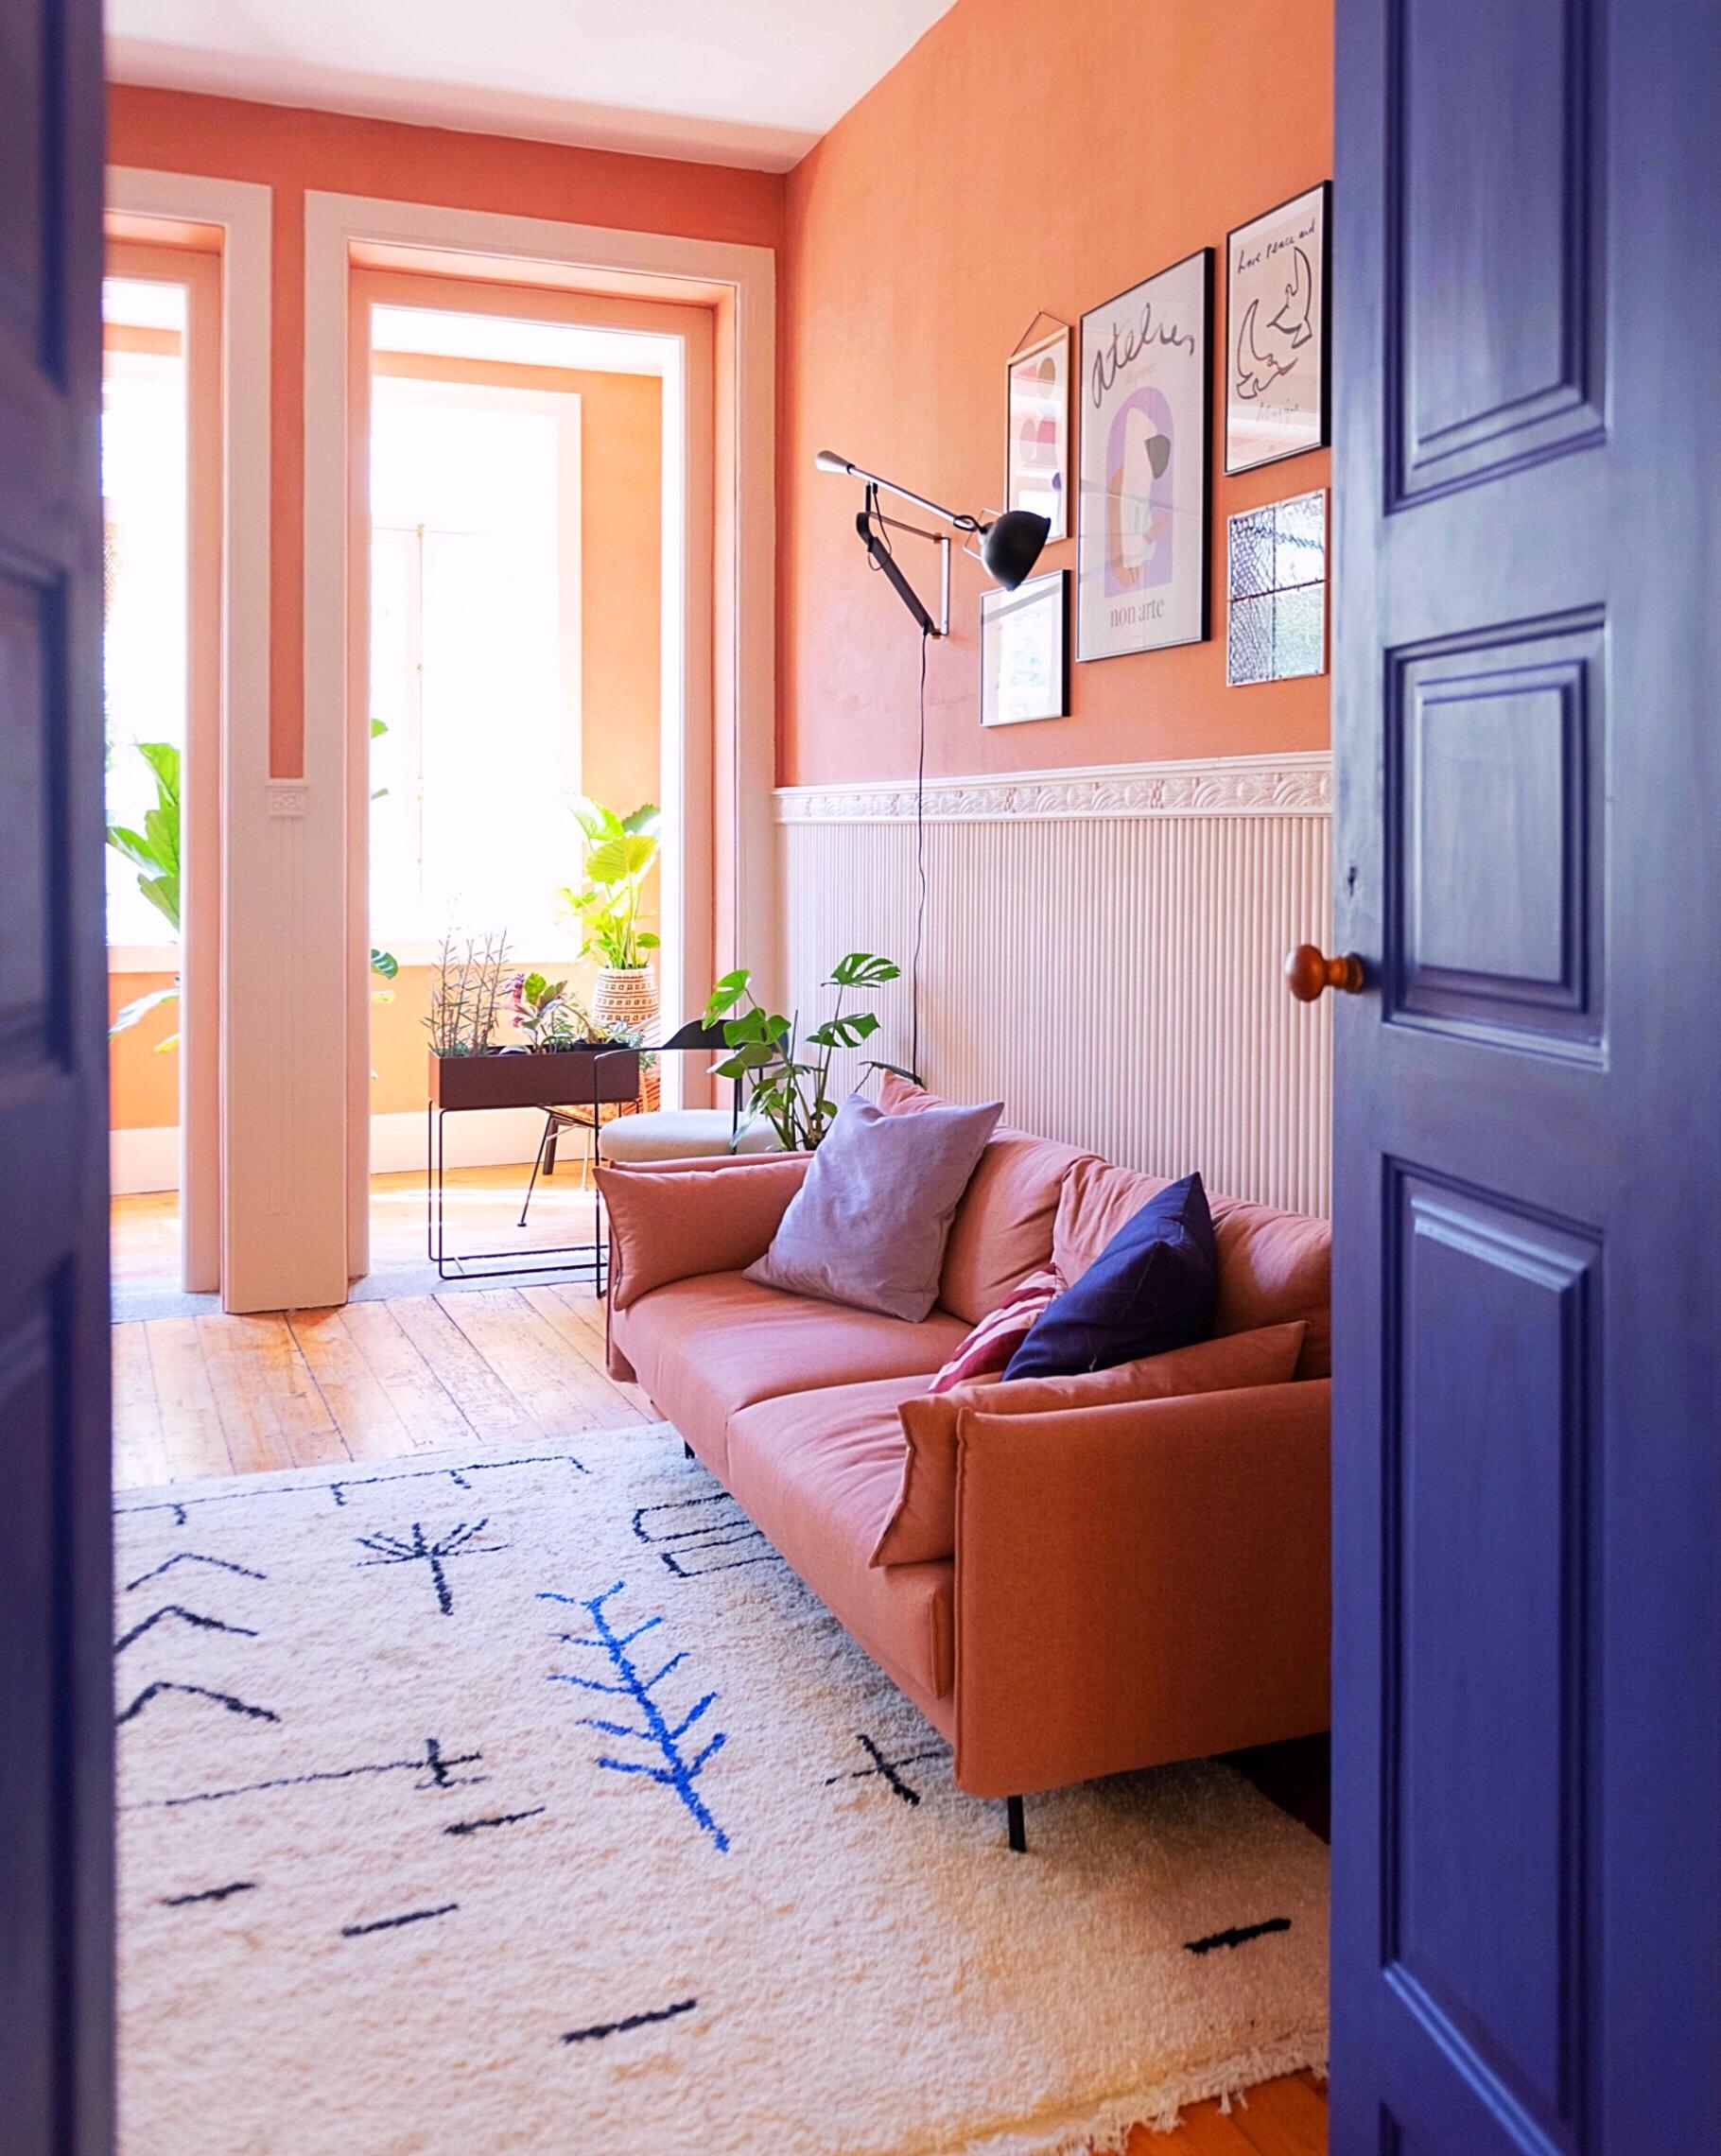 Herzlich willkommen in Portugal 🇵🇹 
#livinroominspo #colorlove #azul